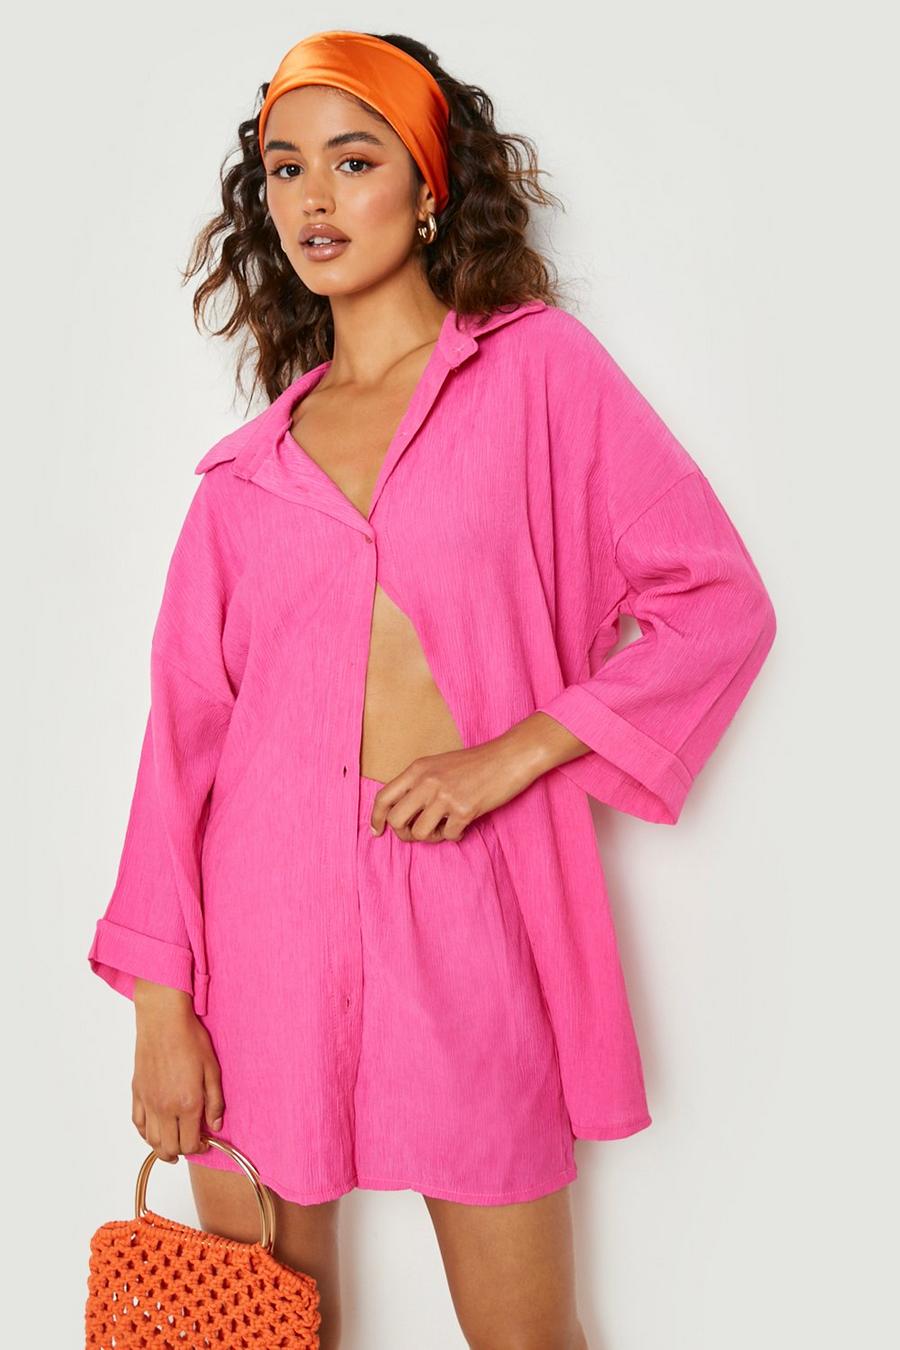 Strukturiertes Oversize Hemd & Shorts in Knitteroptik, Hot pink